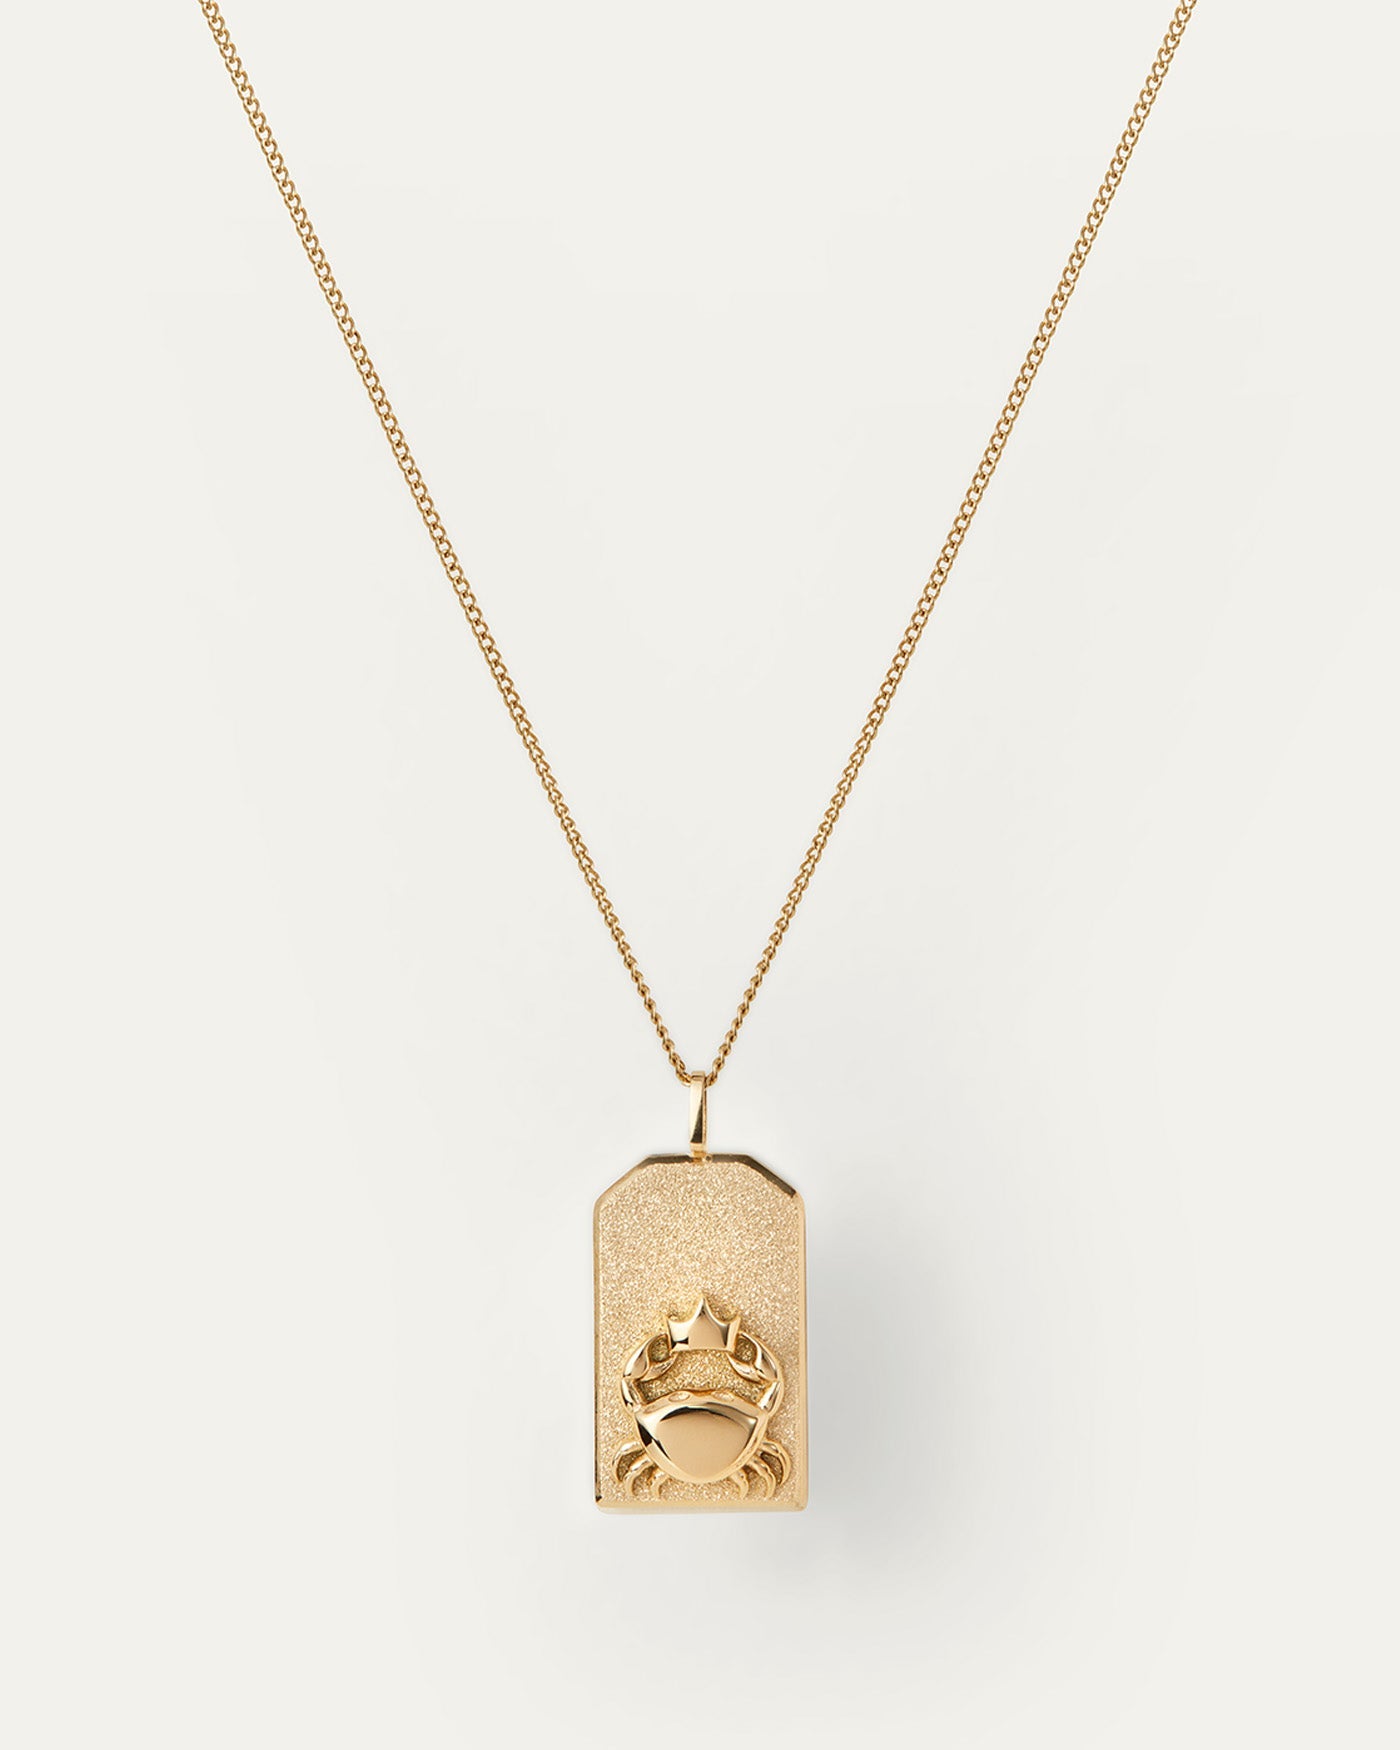 The Cancer Zodiac Pendant Necklace